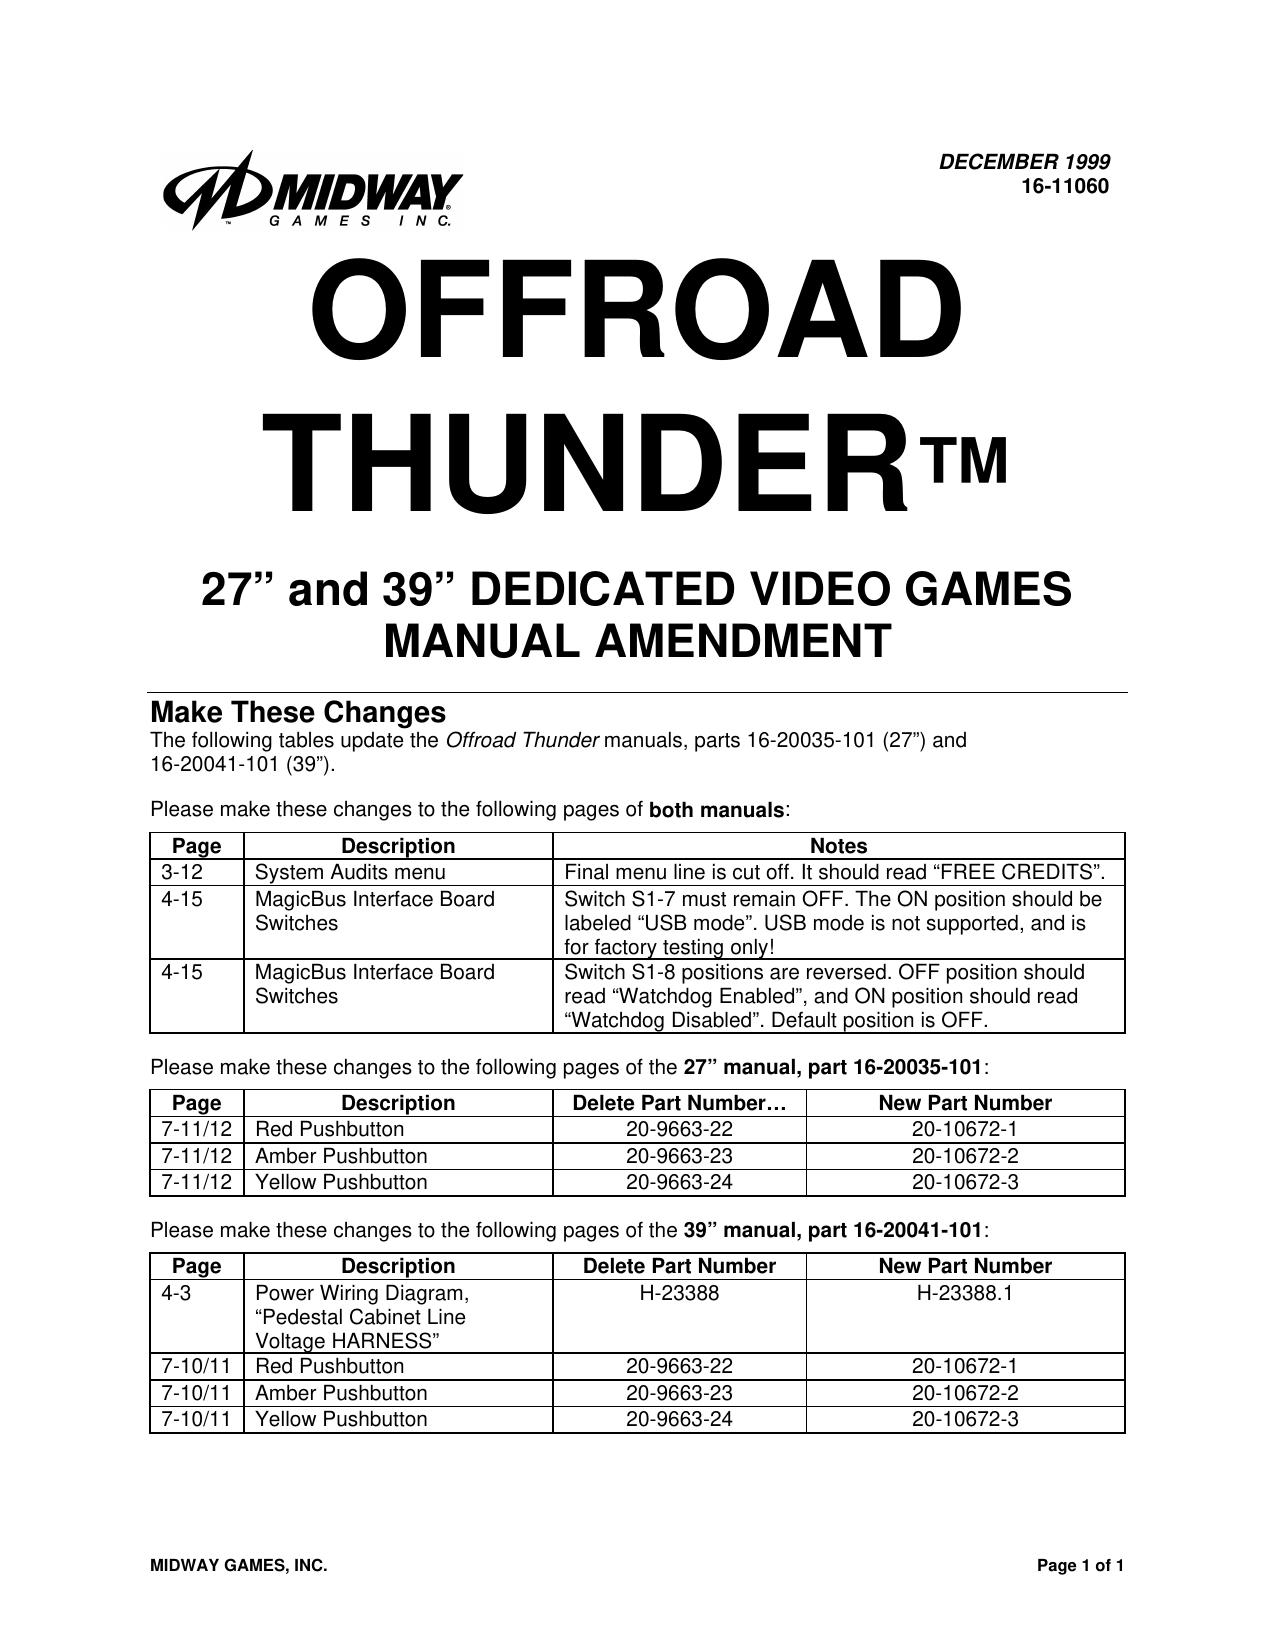 Offroad Thunder amendment (general)